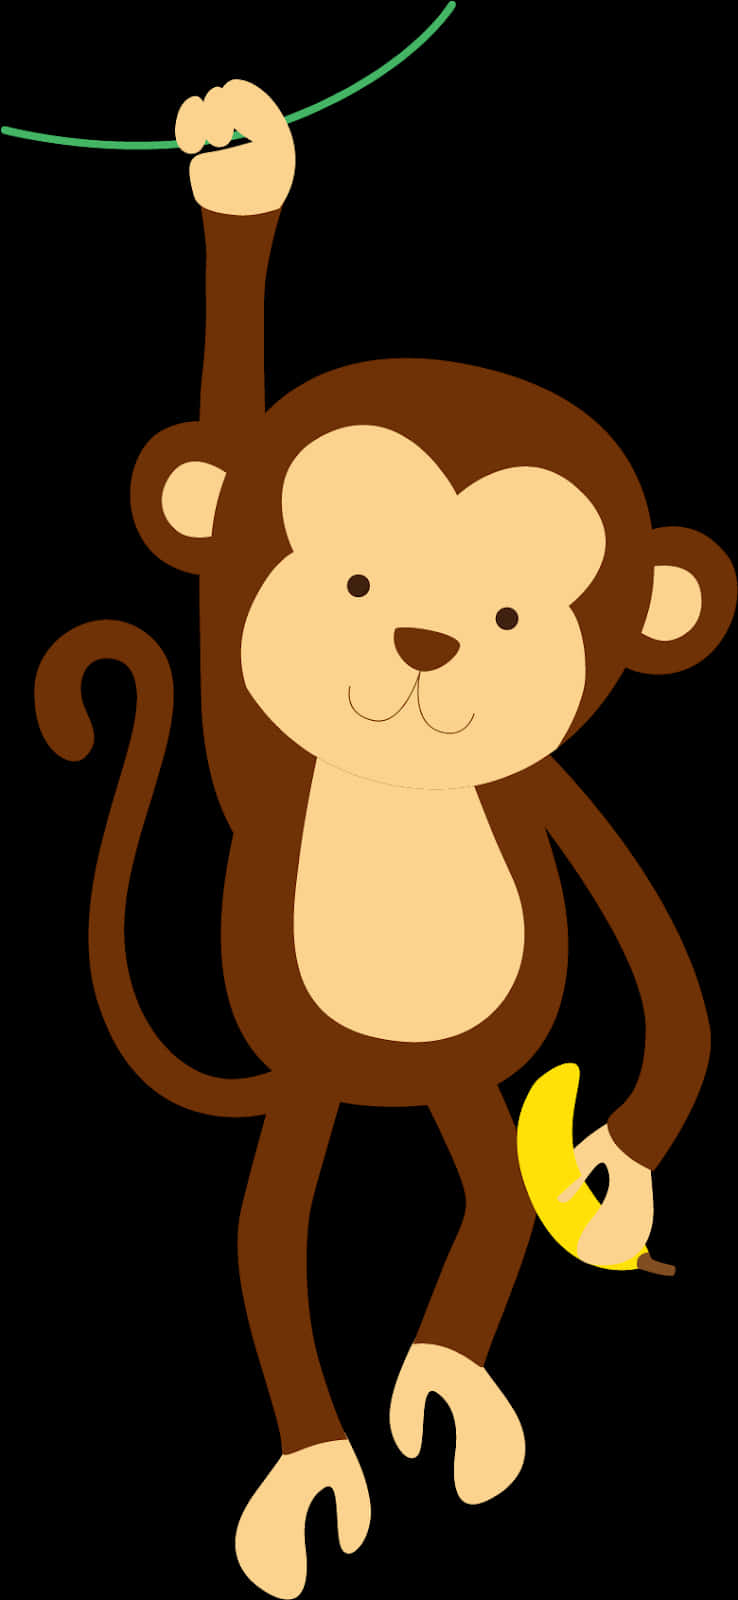 Hanging Monkey With Banana PNG image